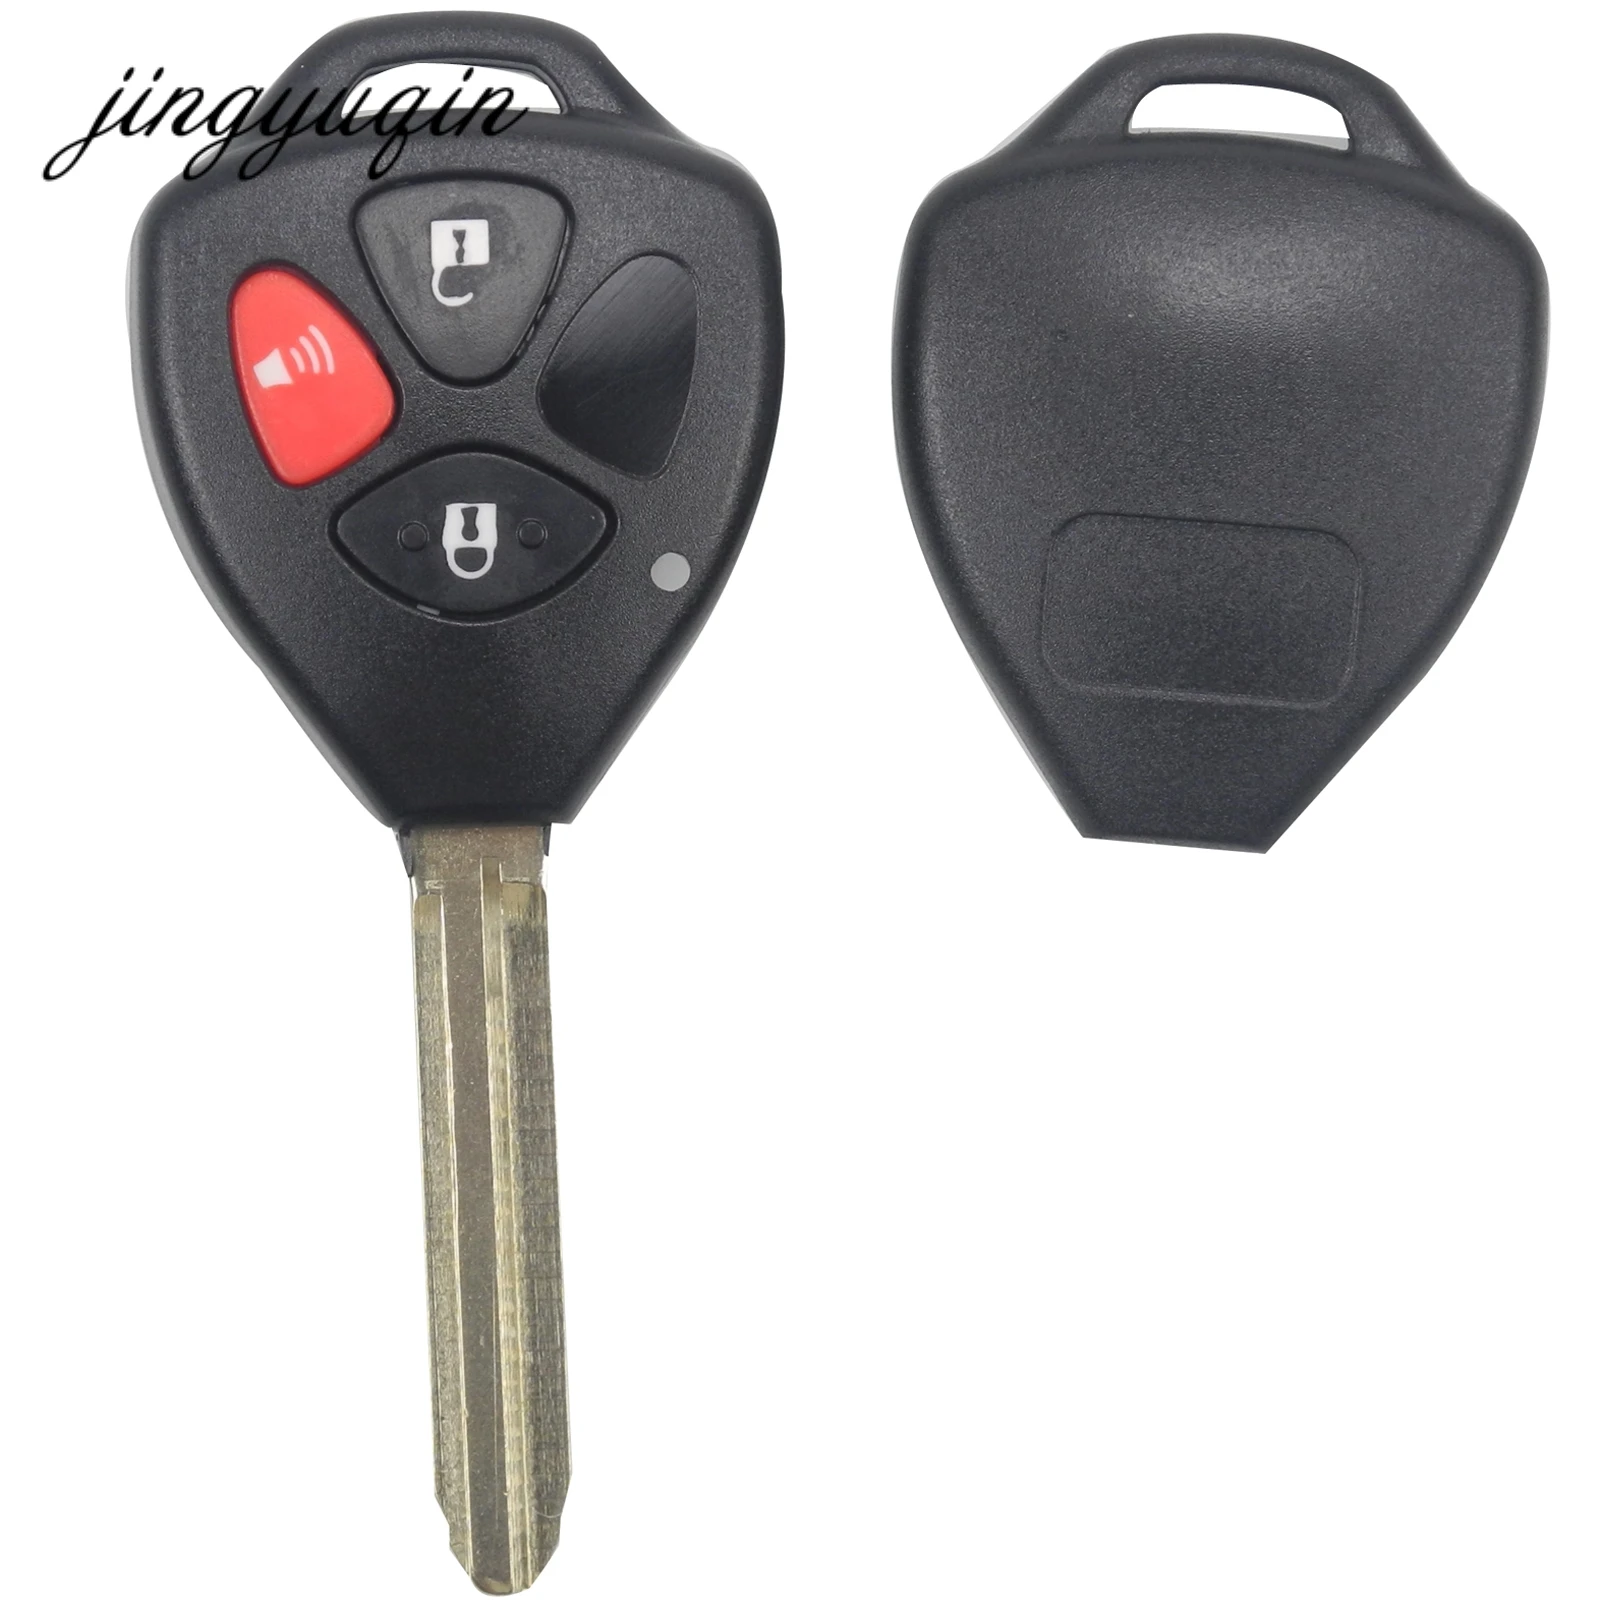 

jingyuqin Uncut Remote Key Shell Case For Toyota RAV4 Yaris Venza Scion tC xA xB xd 3 Buttons Replacement Fob